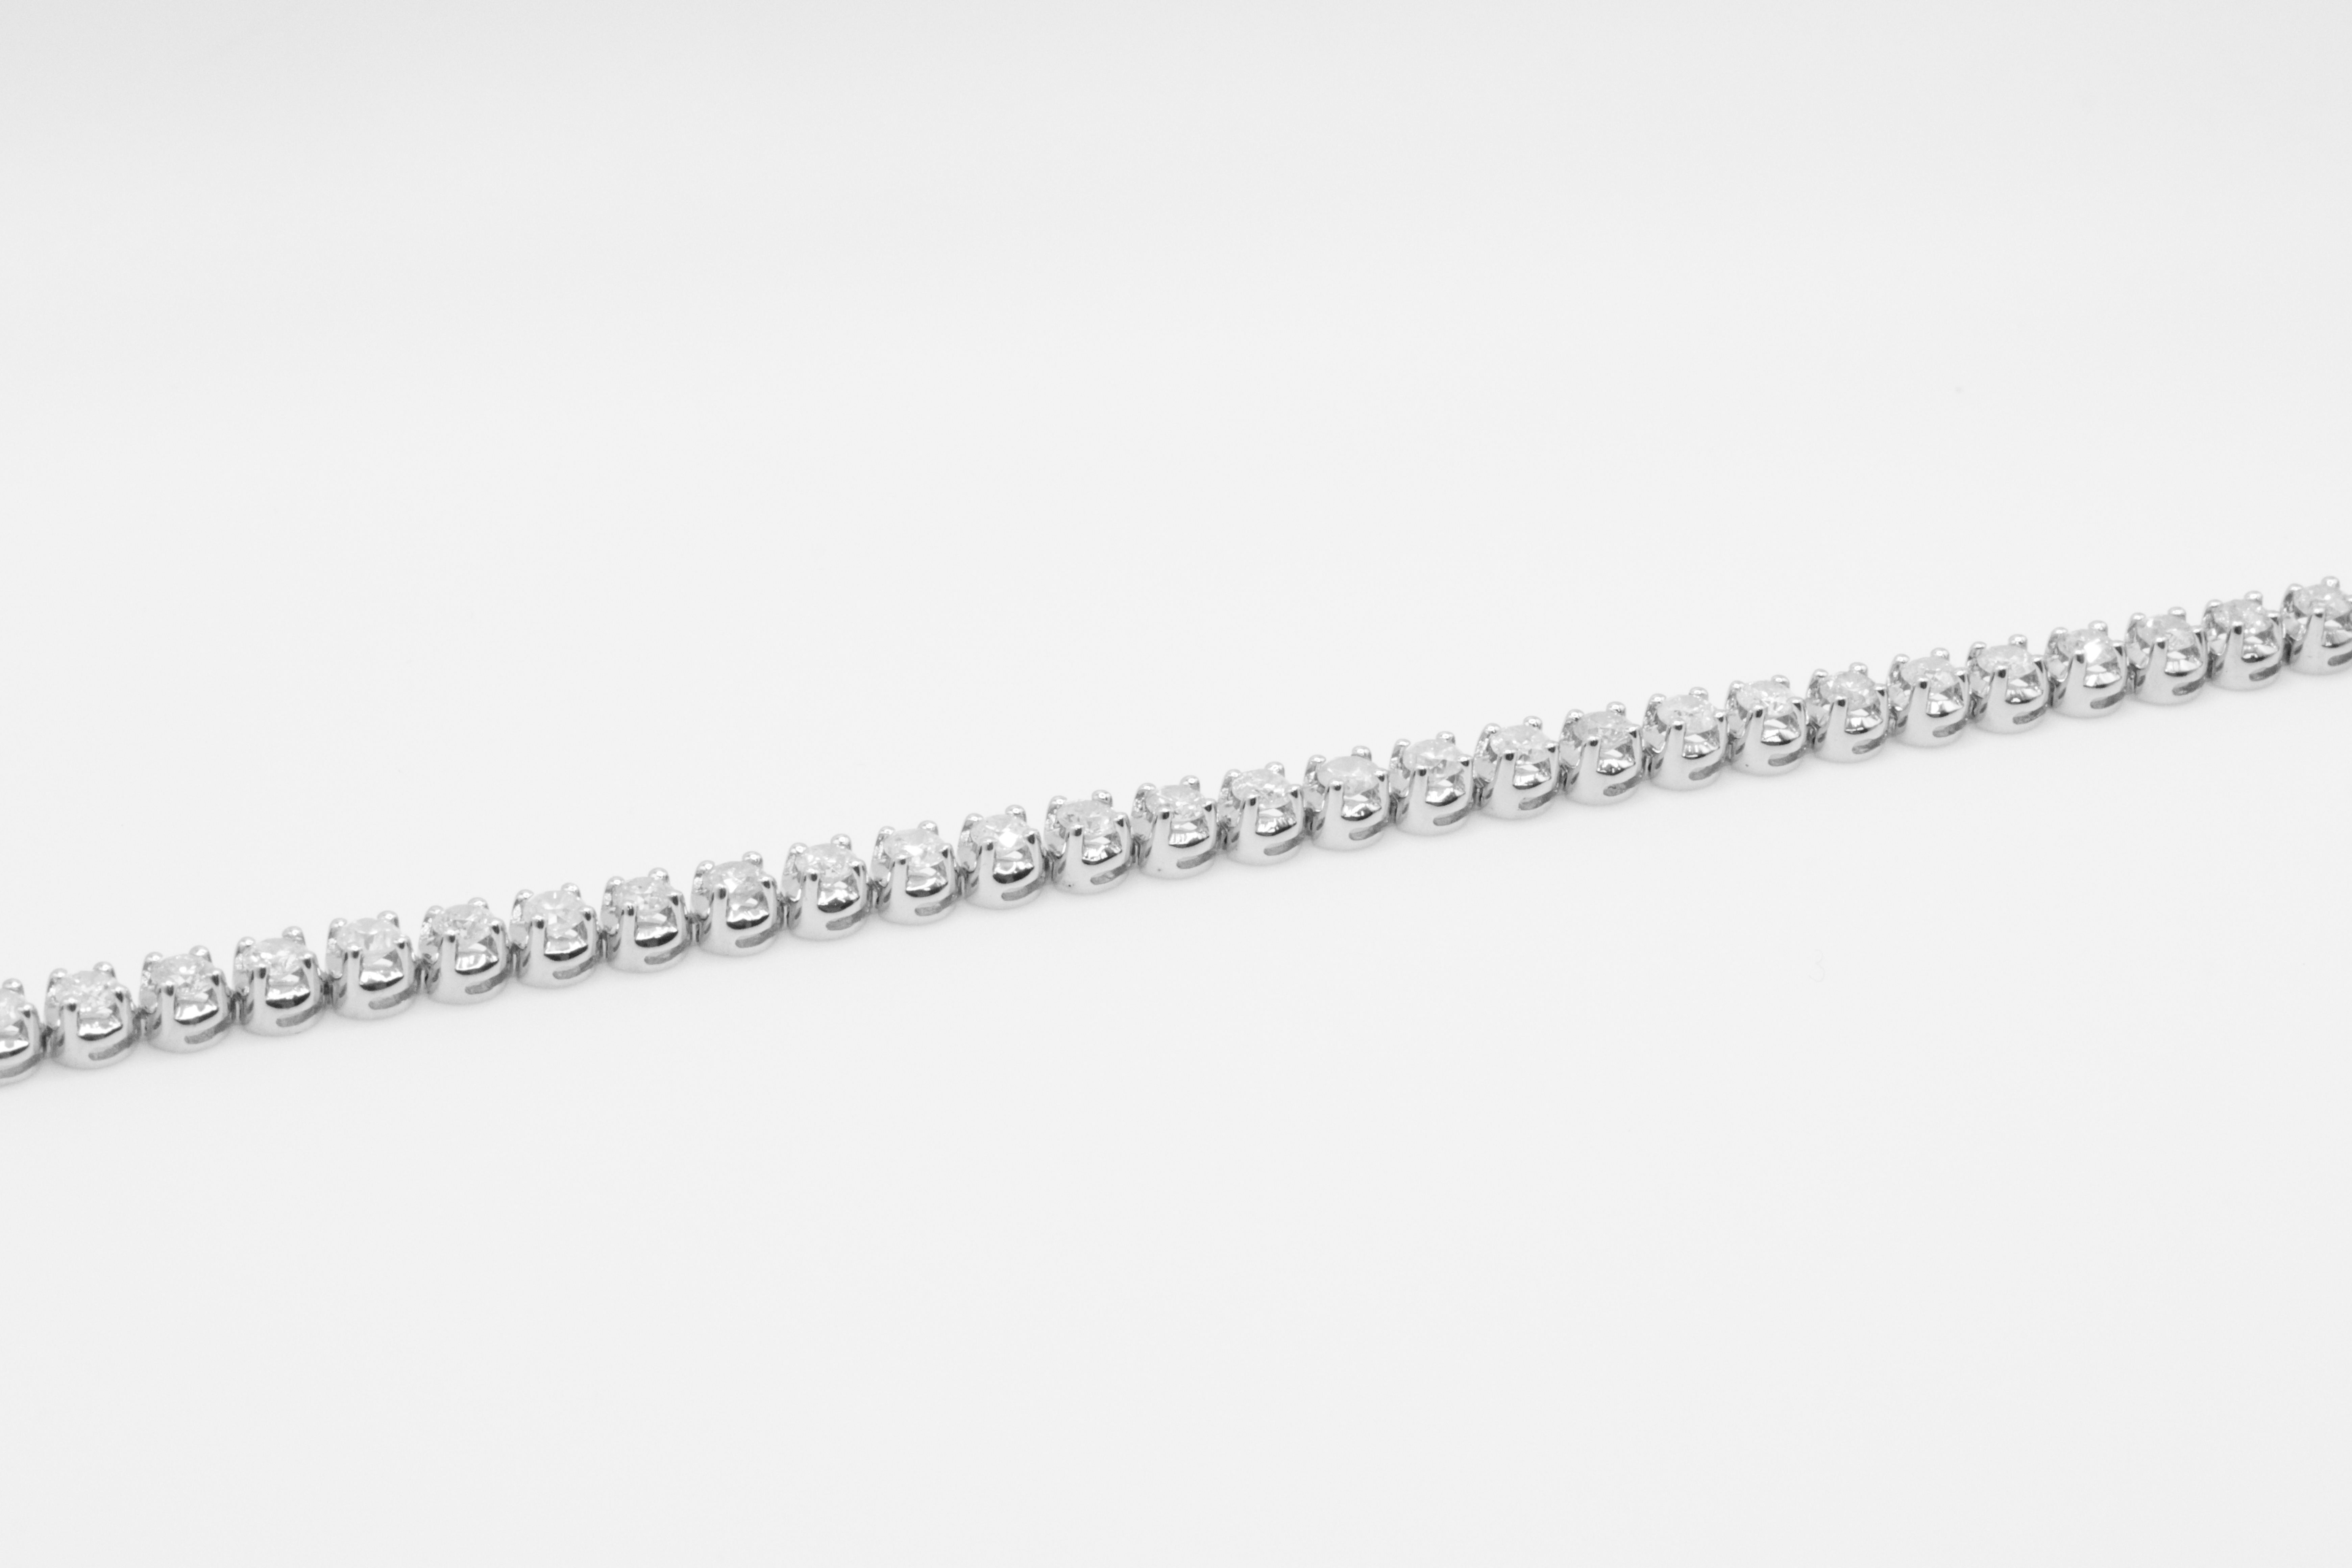 7.0 Carat 18ct White Gold Tennis Bracelet set with Round Brilliant Cut Natural Diamonds - Image 11 of 16